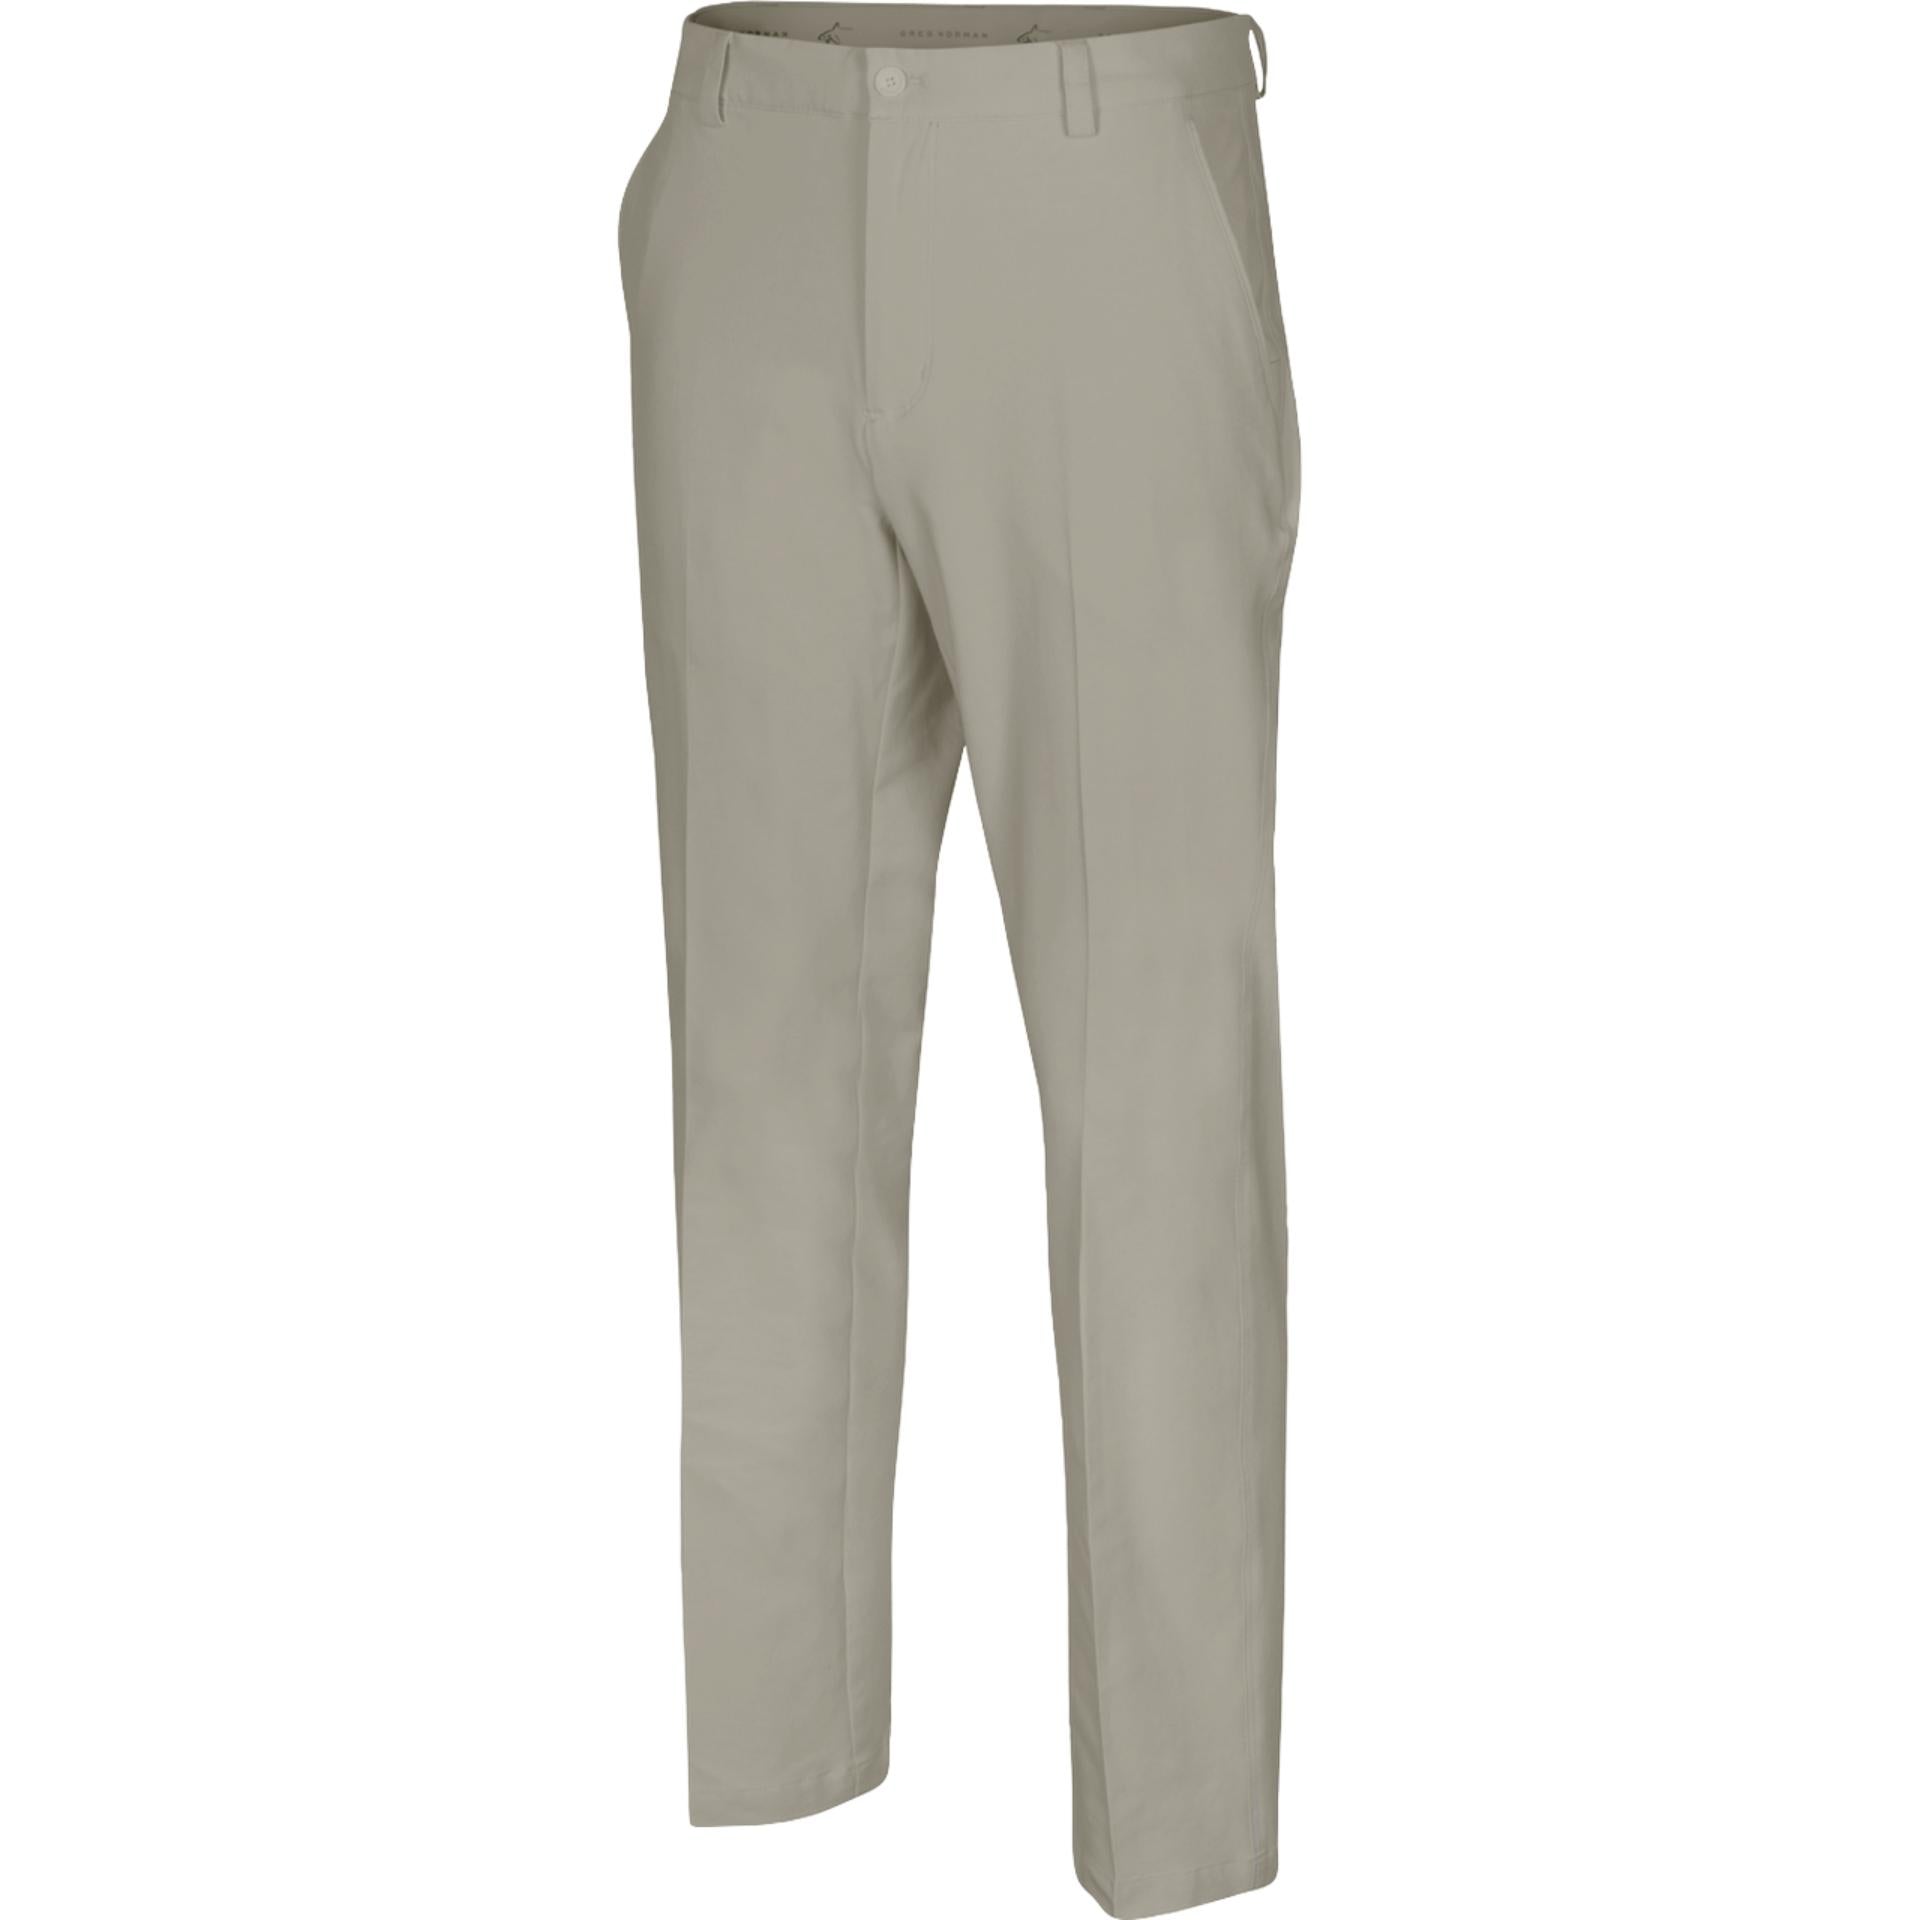 Greg Norman Micro Lux Golf Pants